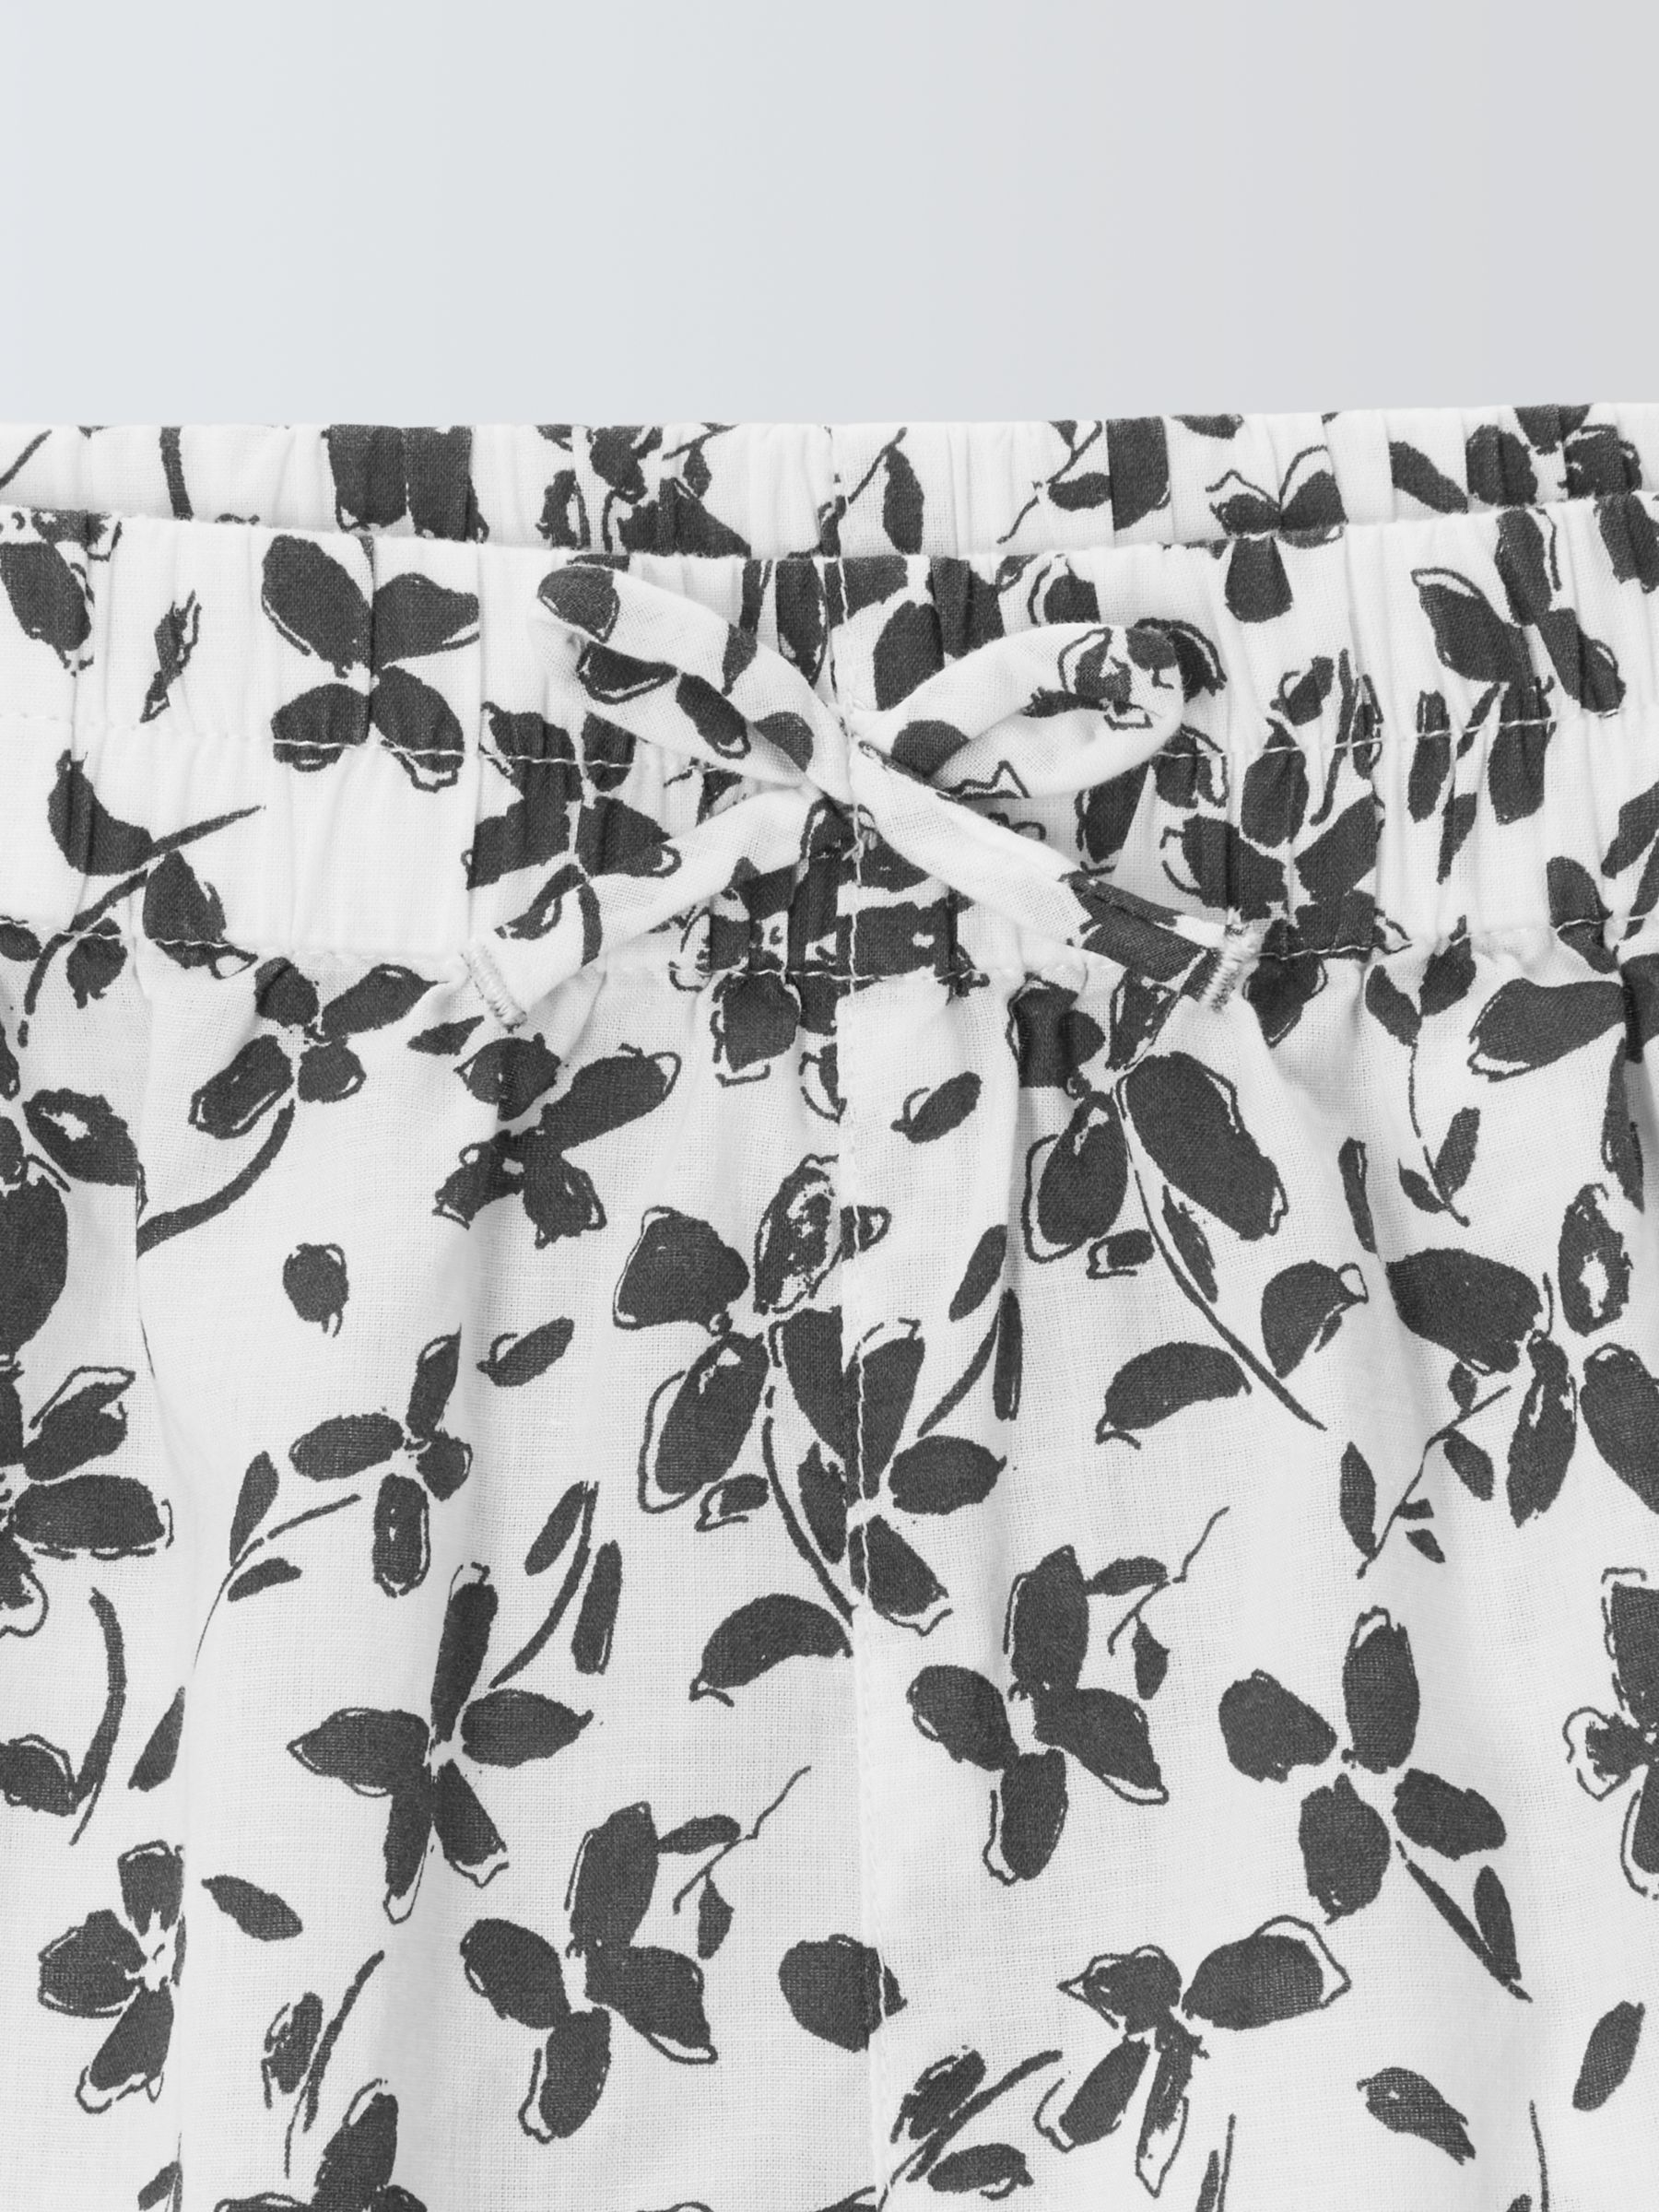 John Lewis Kids' Monochrome Floral Frill Beach Shorts, White/Black, 12 years